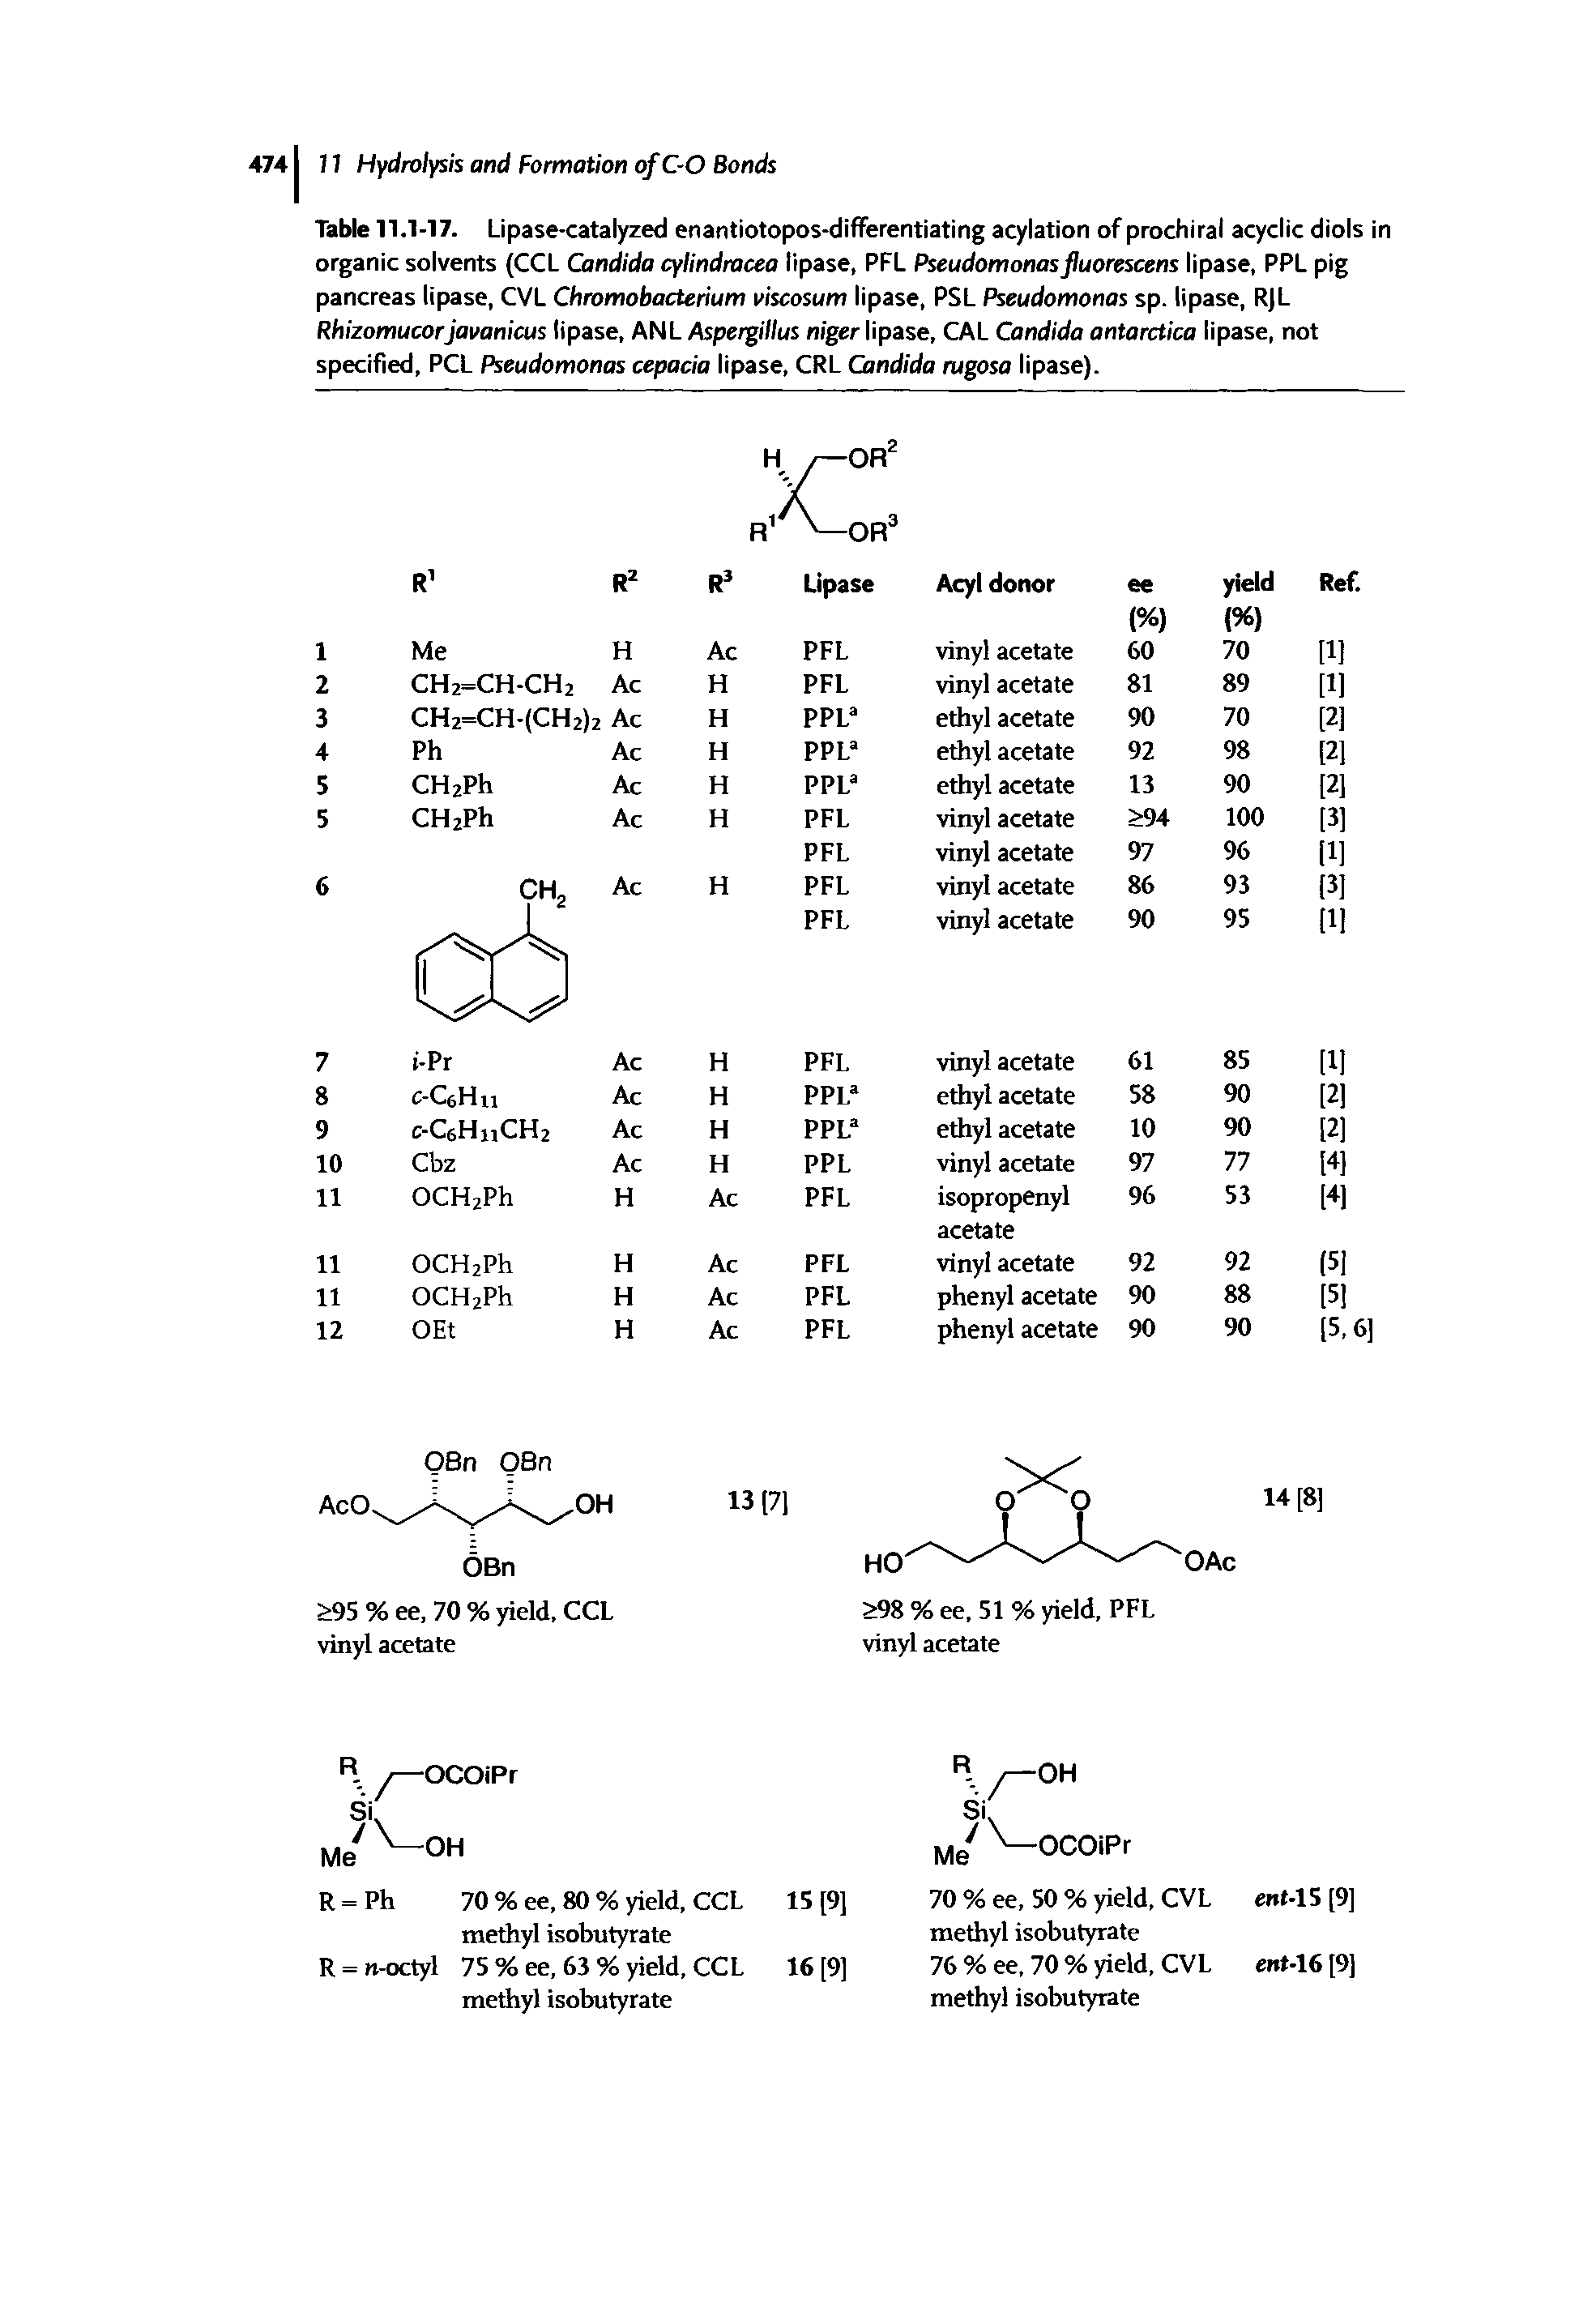 Table 11.1-17. Lipase-catalyzed enantiotopos-differentiating acylation of prochiral acyclic diols in organic solvents (CCL Candida cylindracea lipase, PFL Pseudomonas fluorescens lipase, PPL pig pancreas lipase, CVL Chromobacterium viscosum lipase, PSL Pseudomonas sp. lipase, RJL Rhizomucorjavanicus lipase, ANL Aspergillus niger lipase, CAL Candida antarctica lipase, not specified, PCL Pseudomonas cepacia lipase, CRL Candida rugosa lipase).